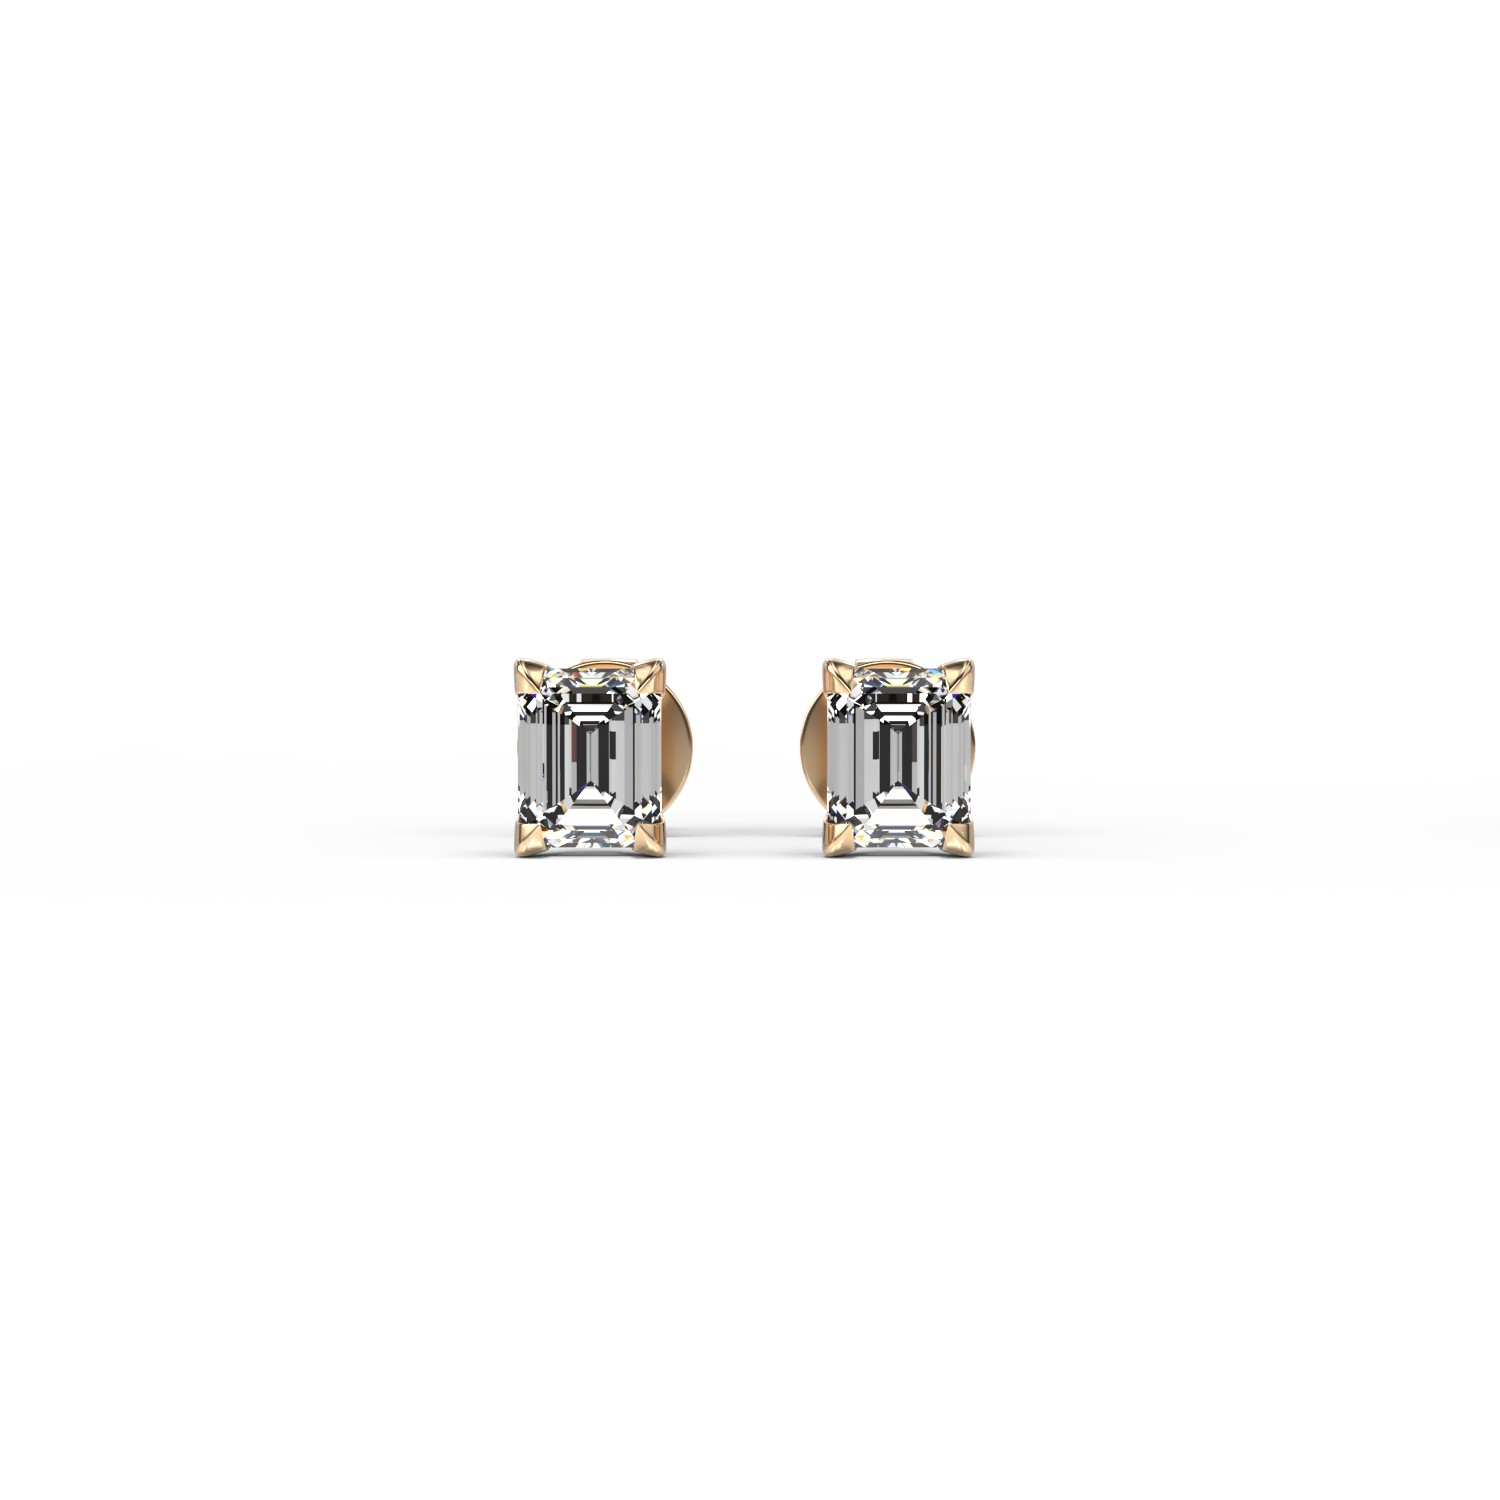 18K yellow gold earrings with 0.8ct diamonds